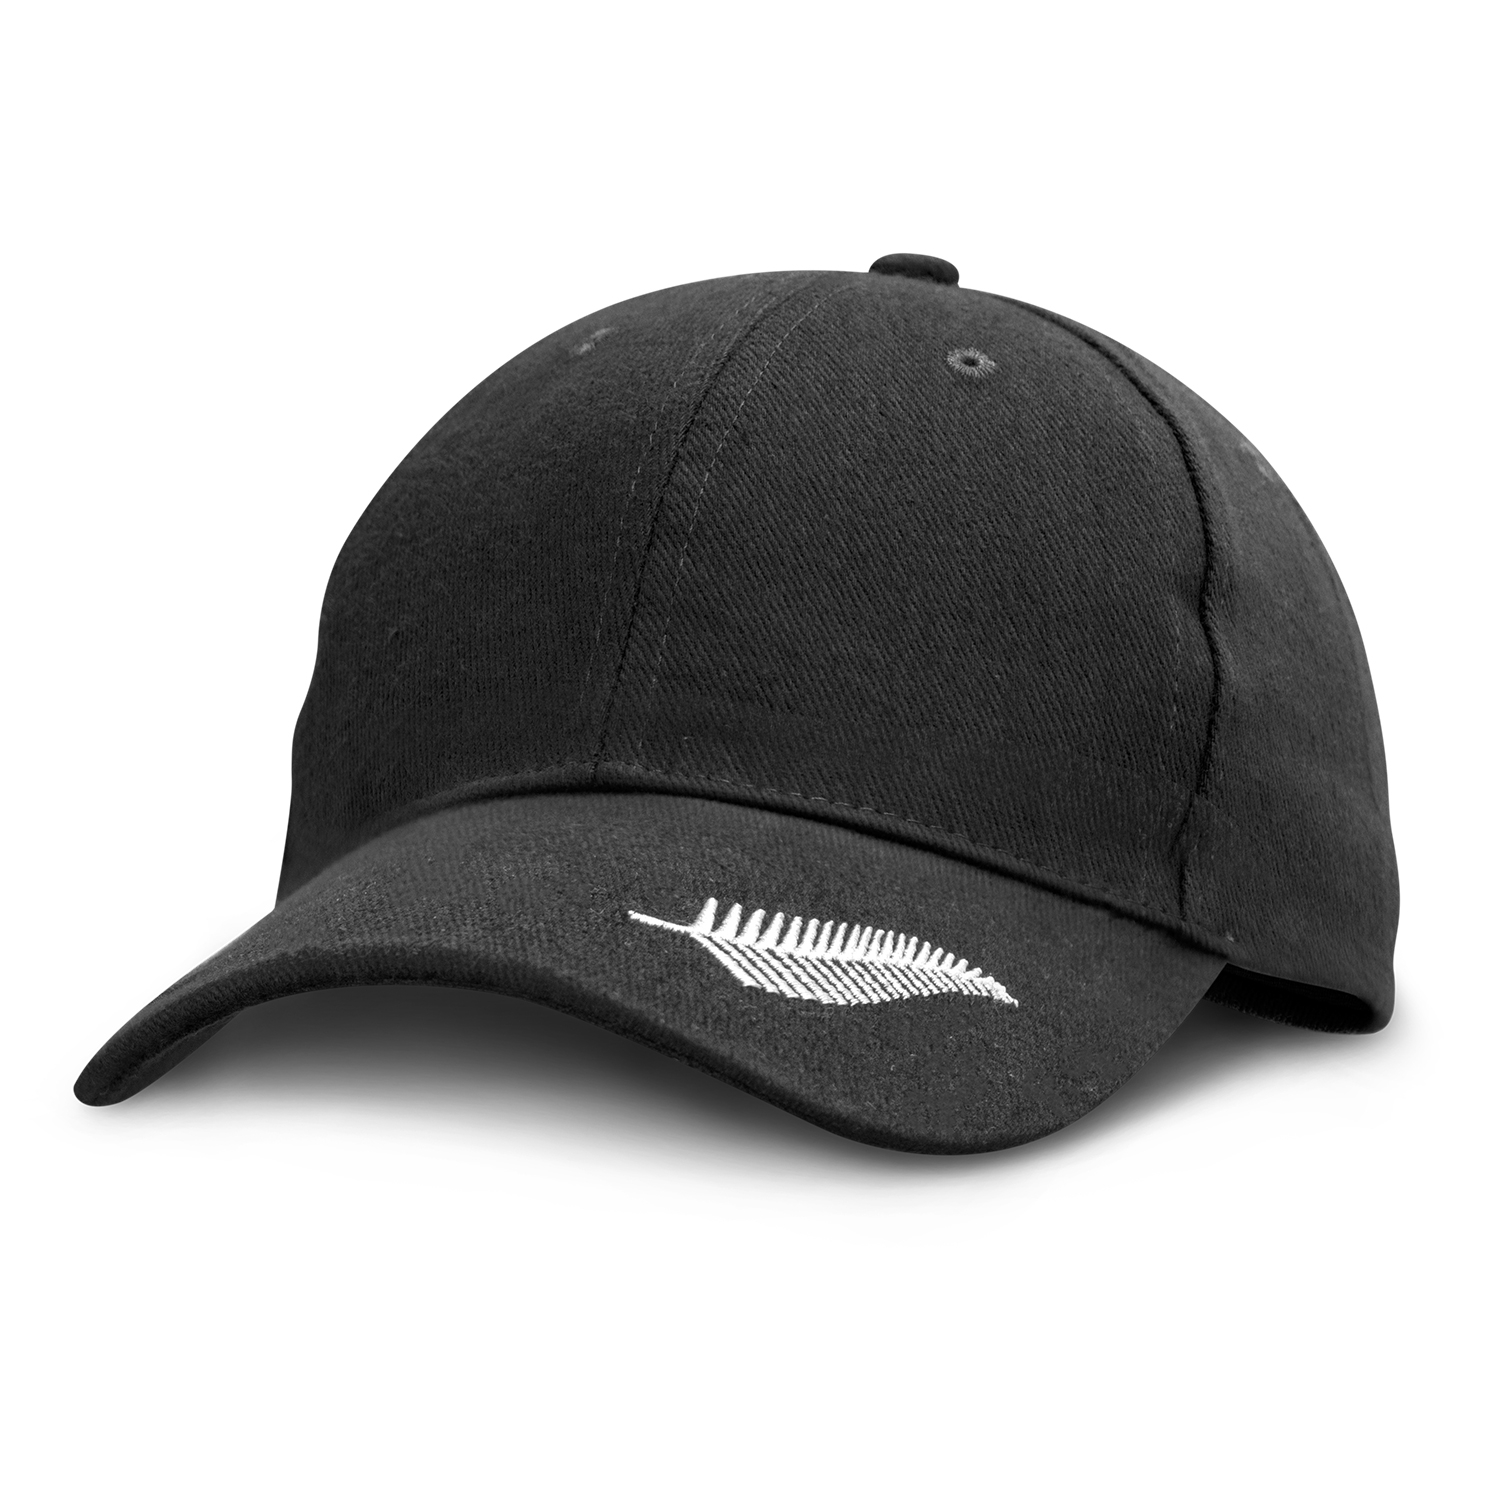 Summer Kiwiana Cap cap